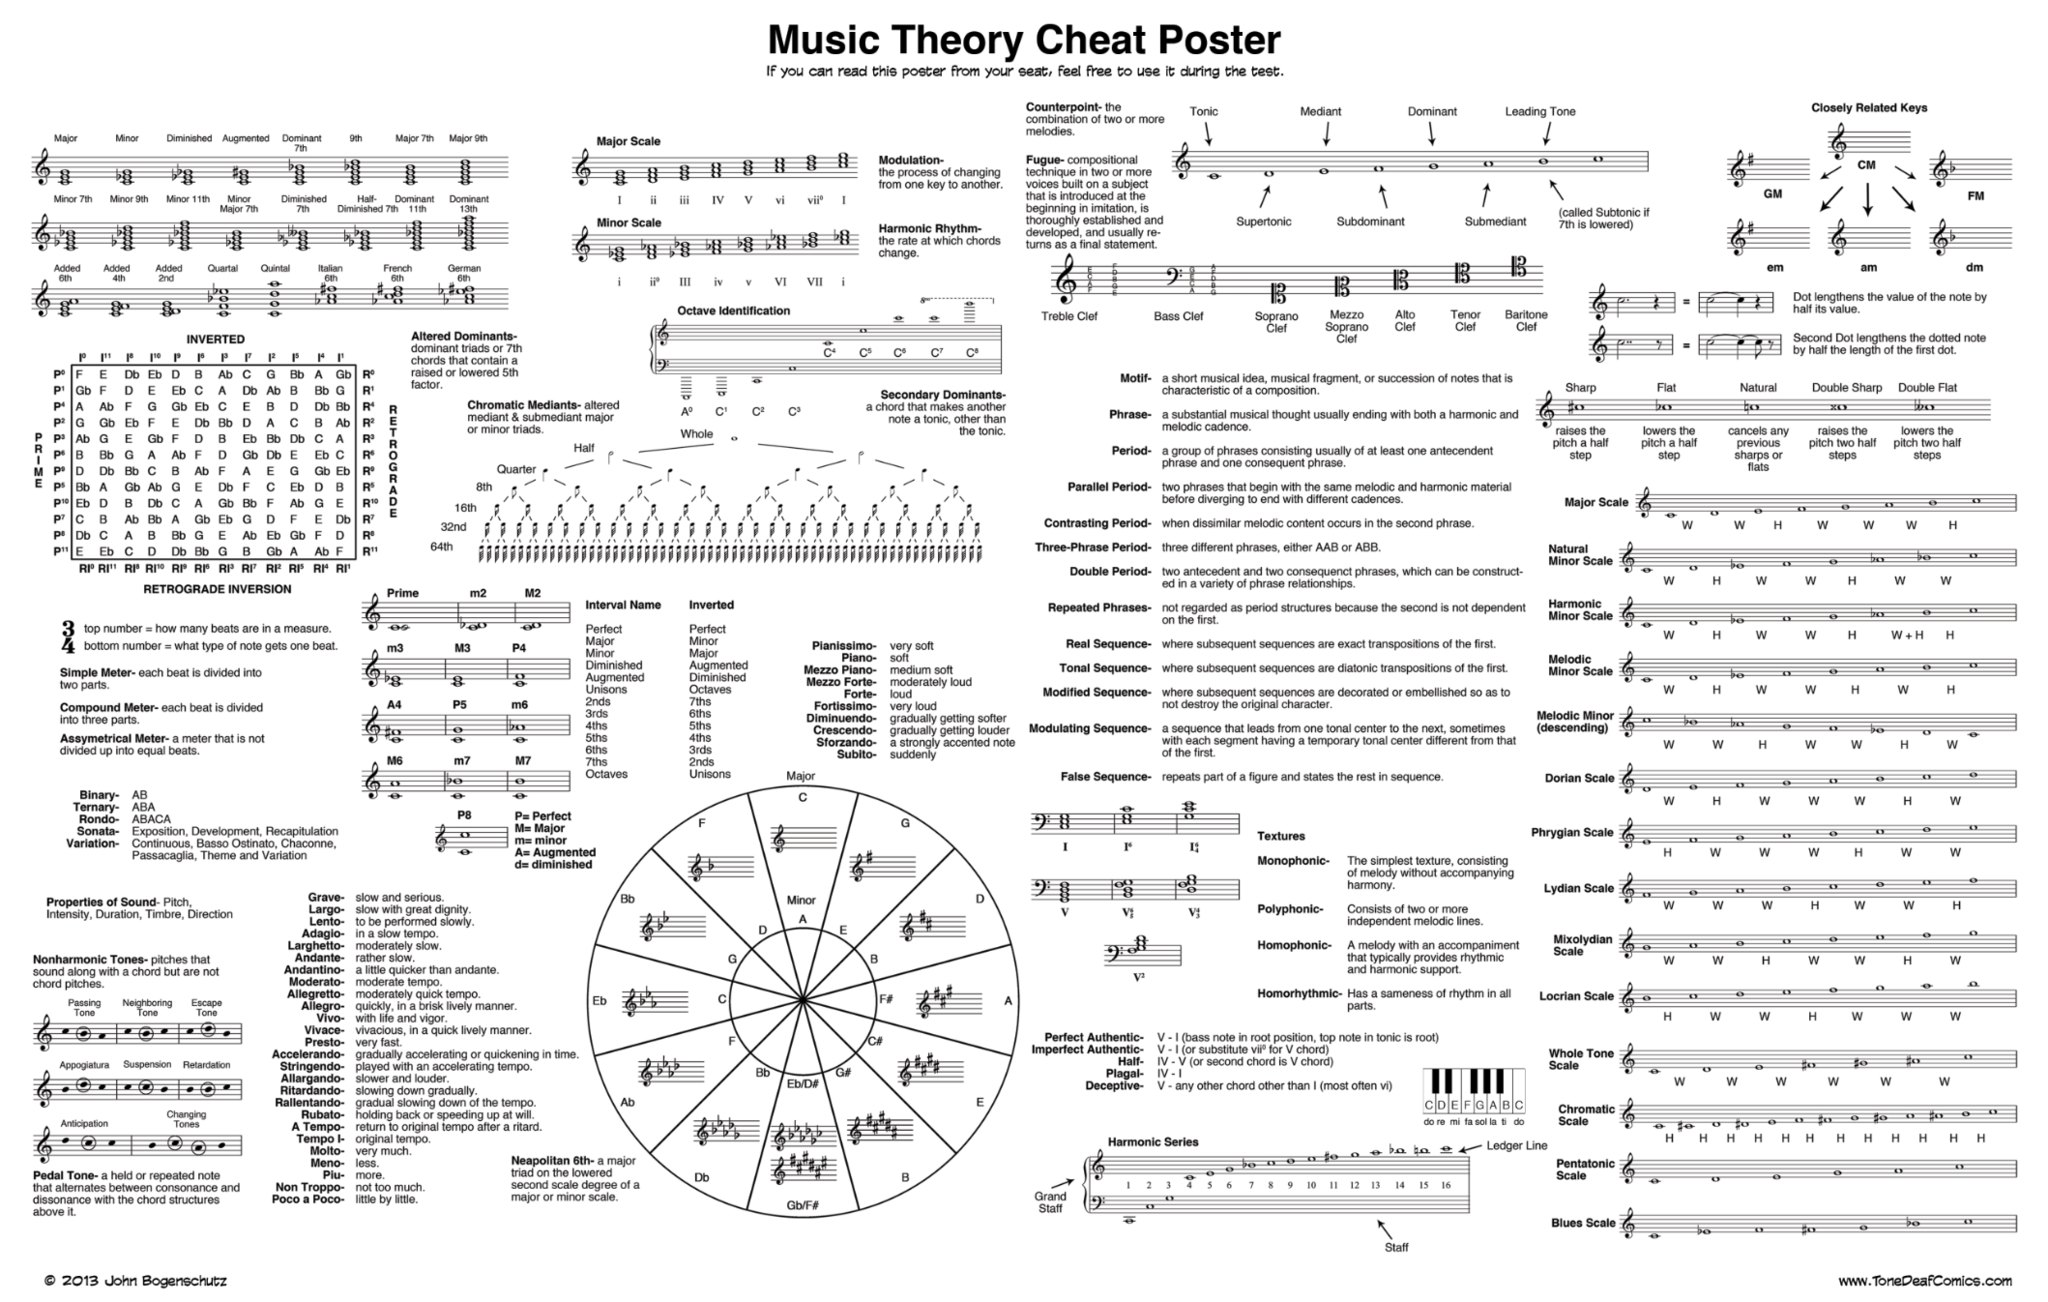 piano-sheet-music-cheat-sheet-13-best-music-images-on-pinterest-sheet